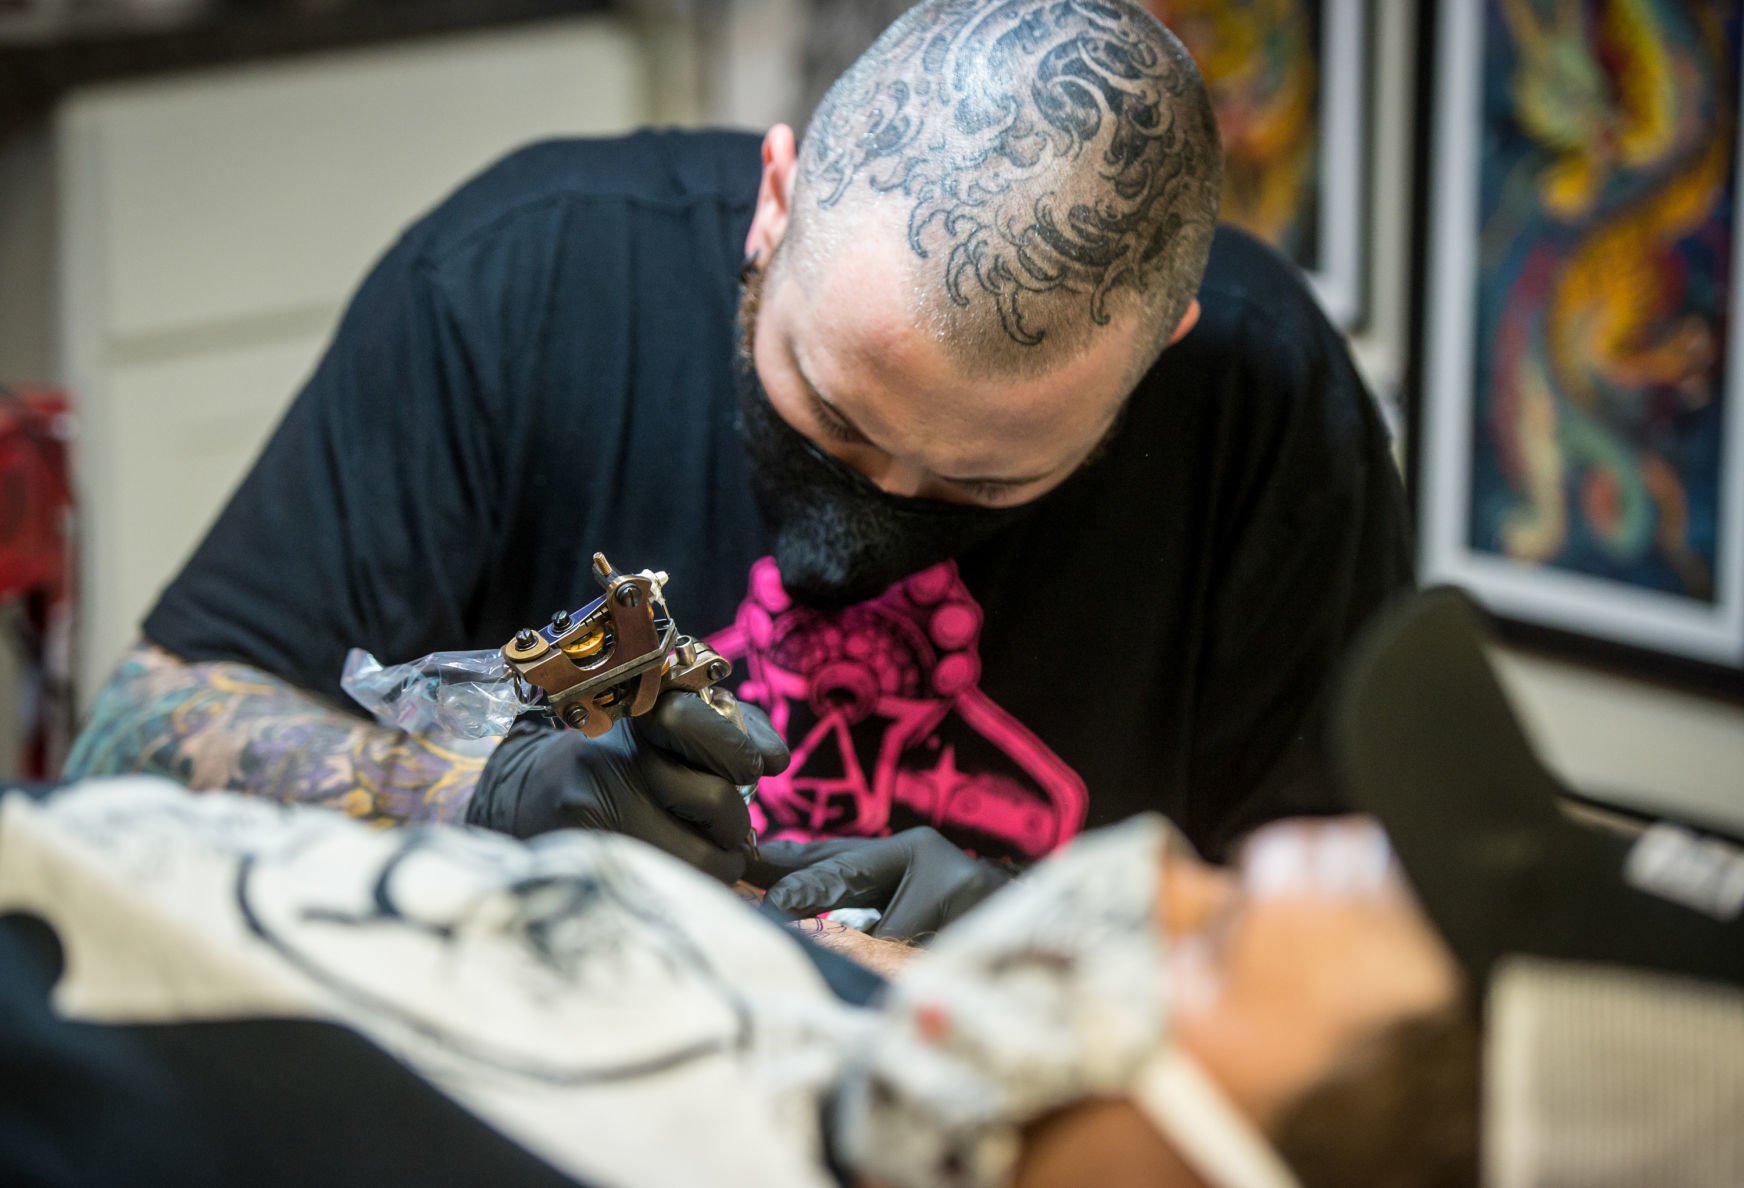 Mask Before You Ink Tattoo Shops Open Under Phase One Regulations   Coronavirus  dnronlinecom